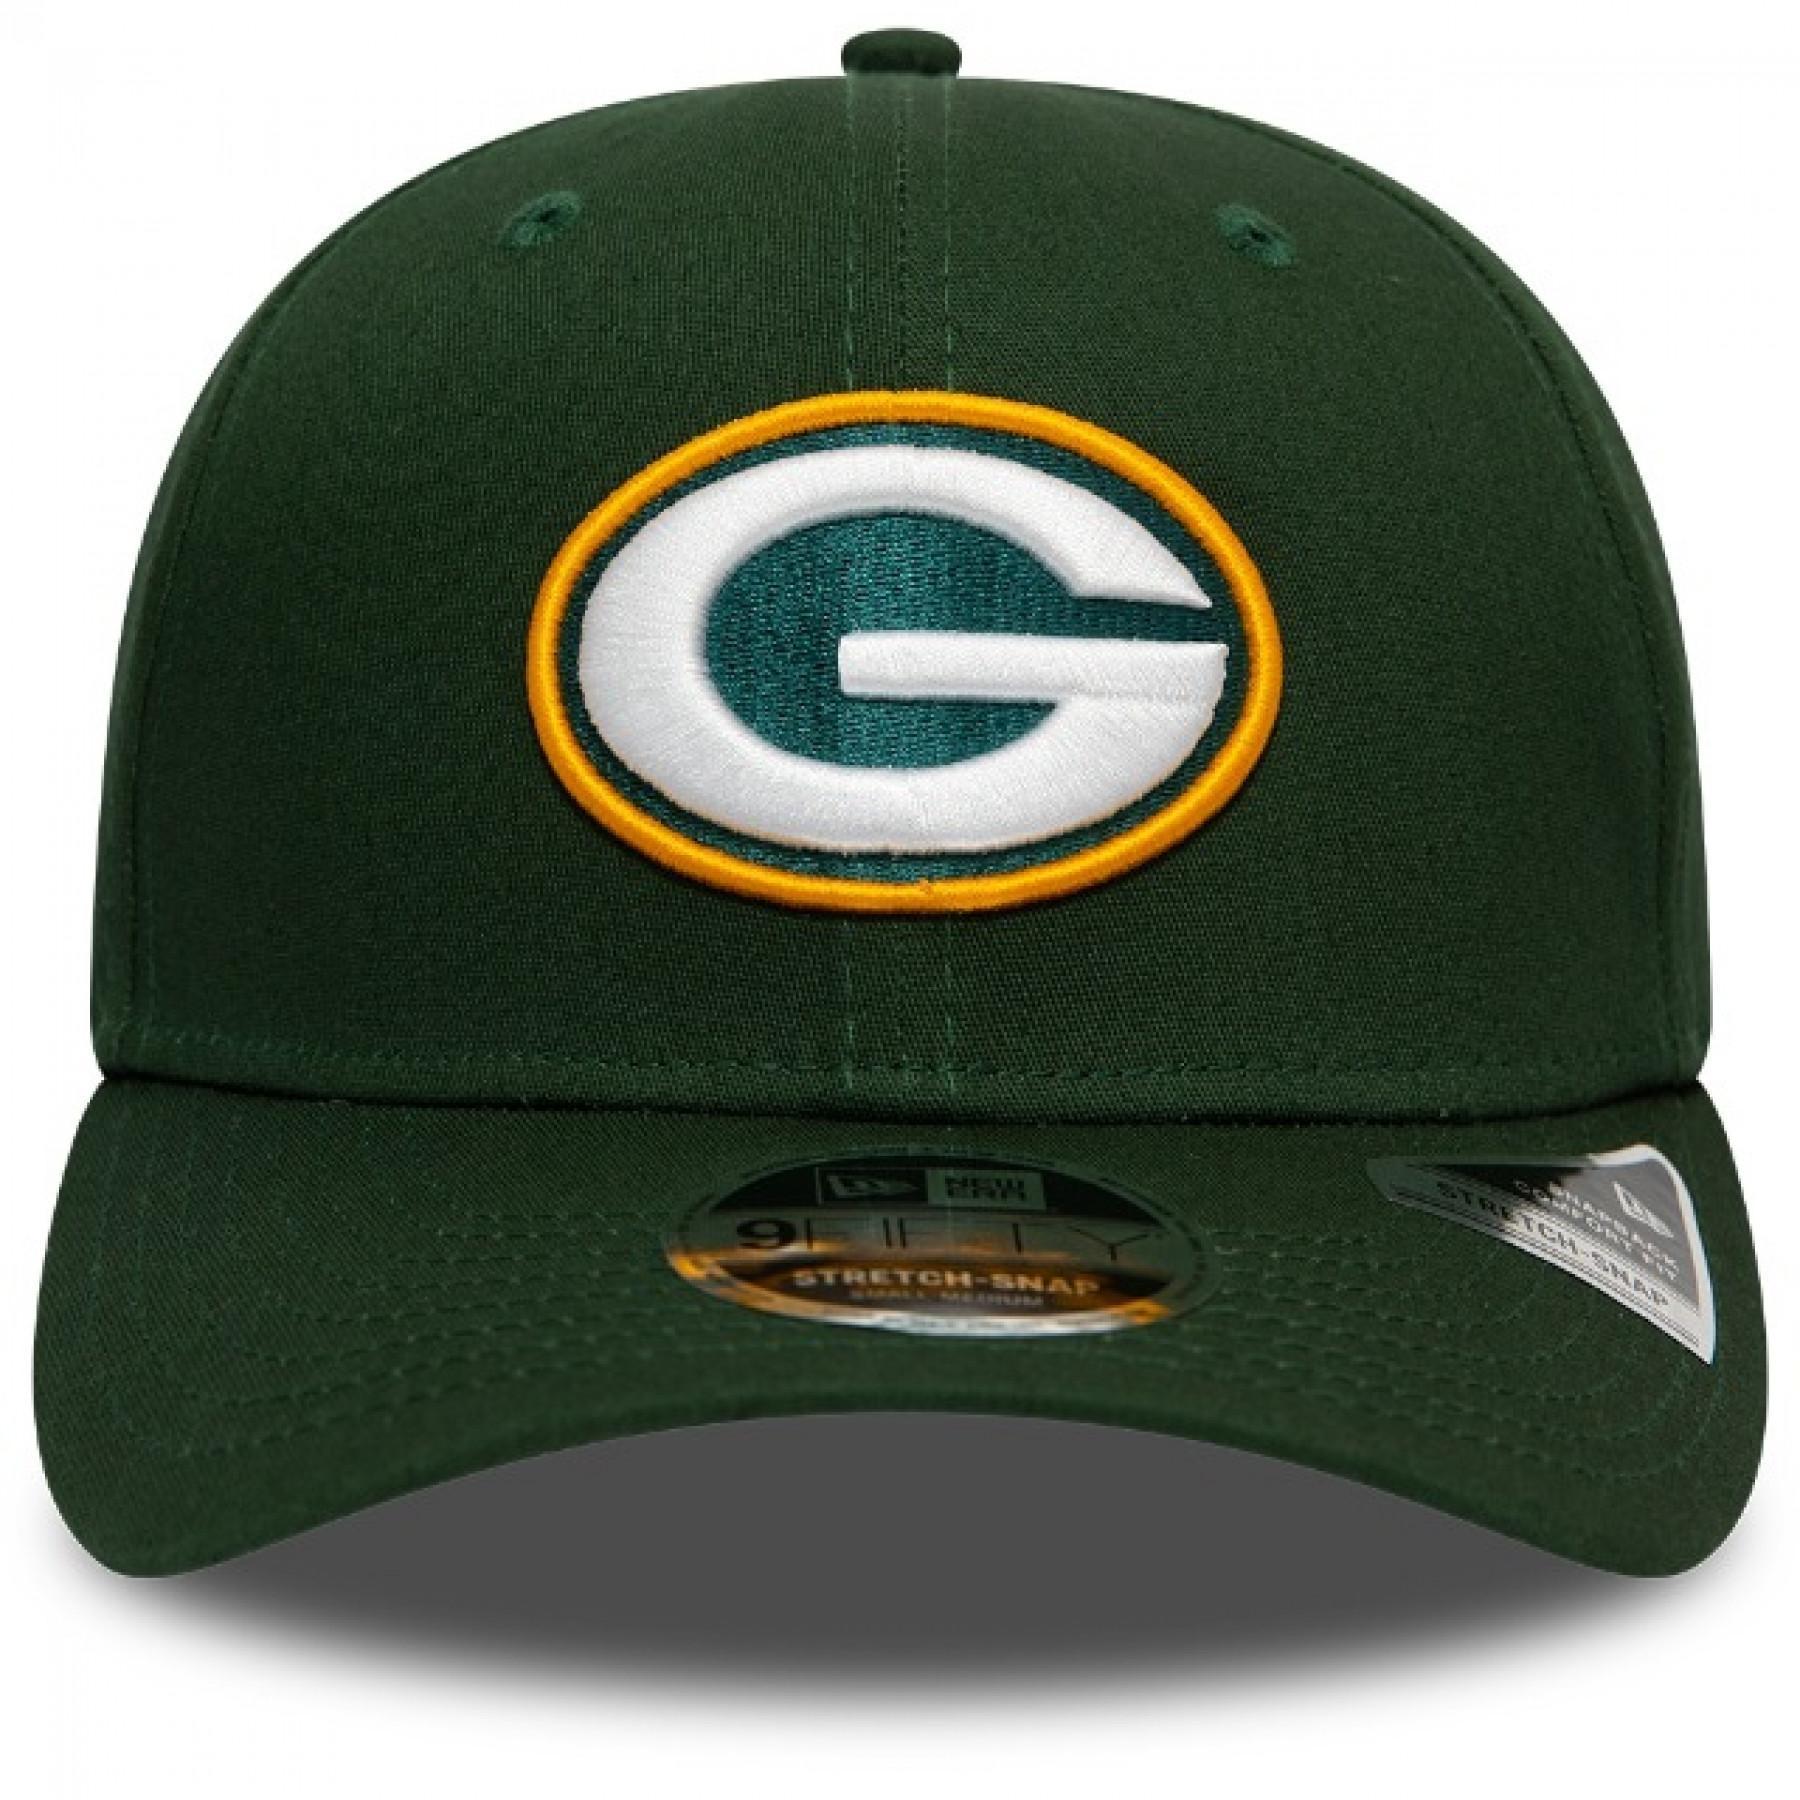 Cap New Era Packers 9fifty